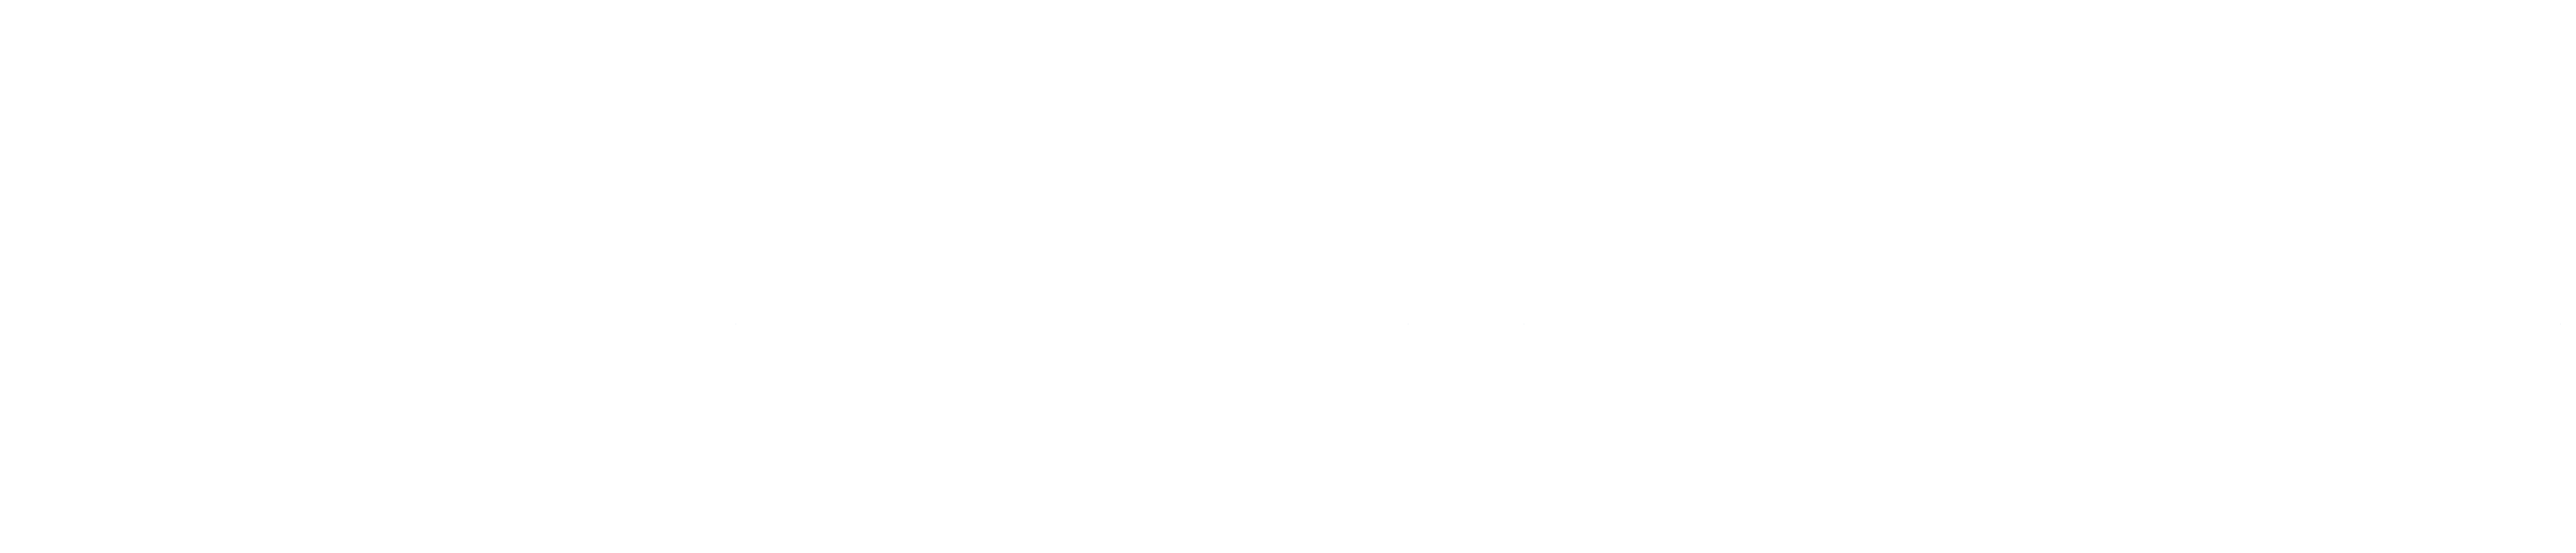 Thompson Law logo